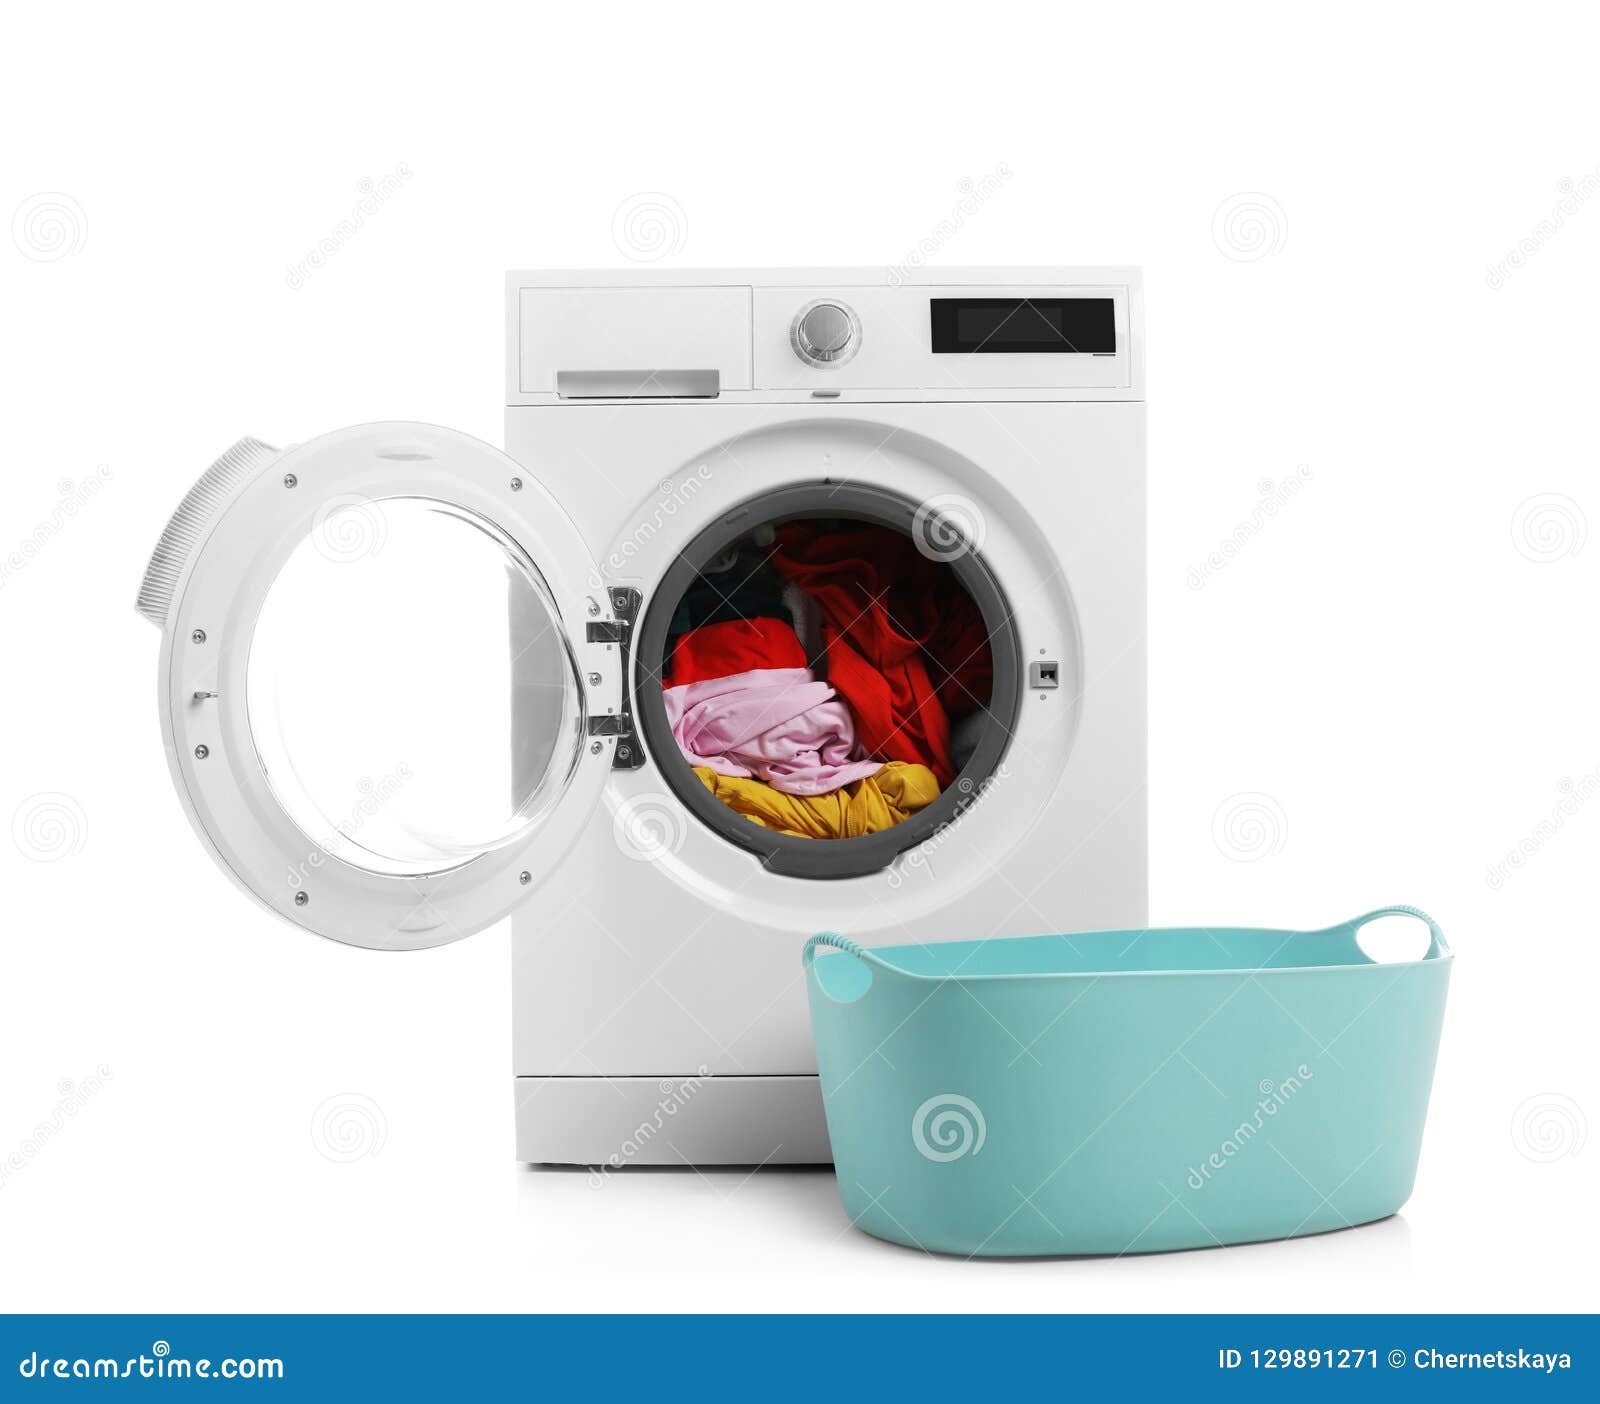 Modern Washing Machine with Laundry and Basket Stock Image - Image of ...